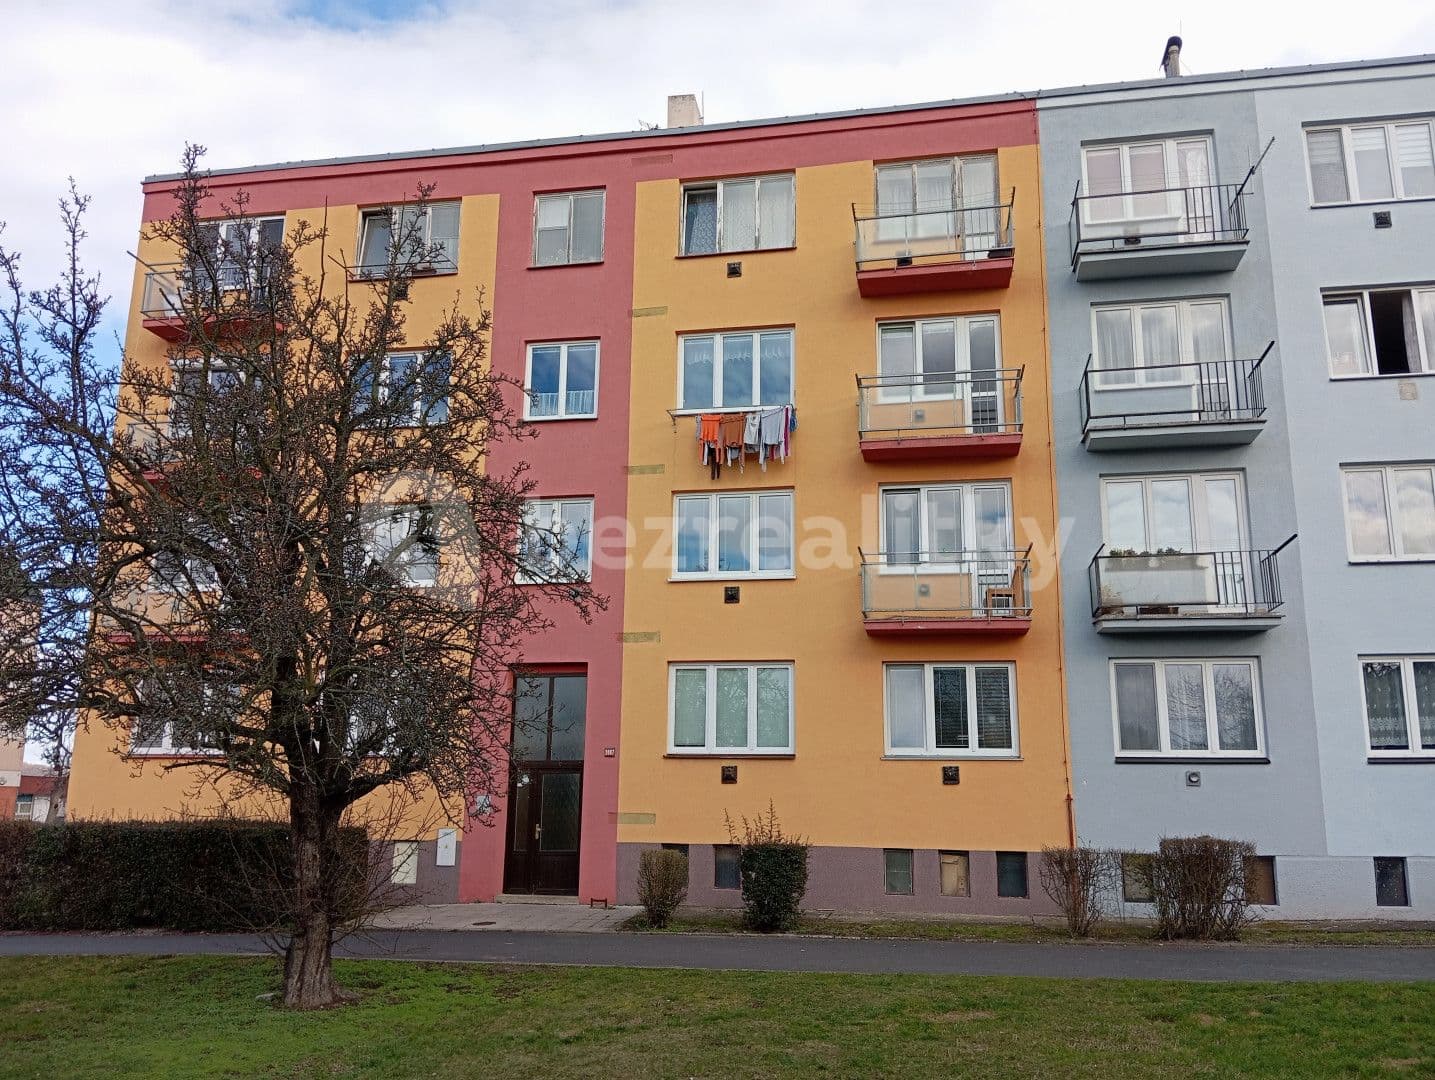 Predaj bytu 2-izbový 52 m², Slovenského národního povstání, Louny, Ústecký kraj